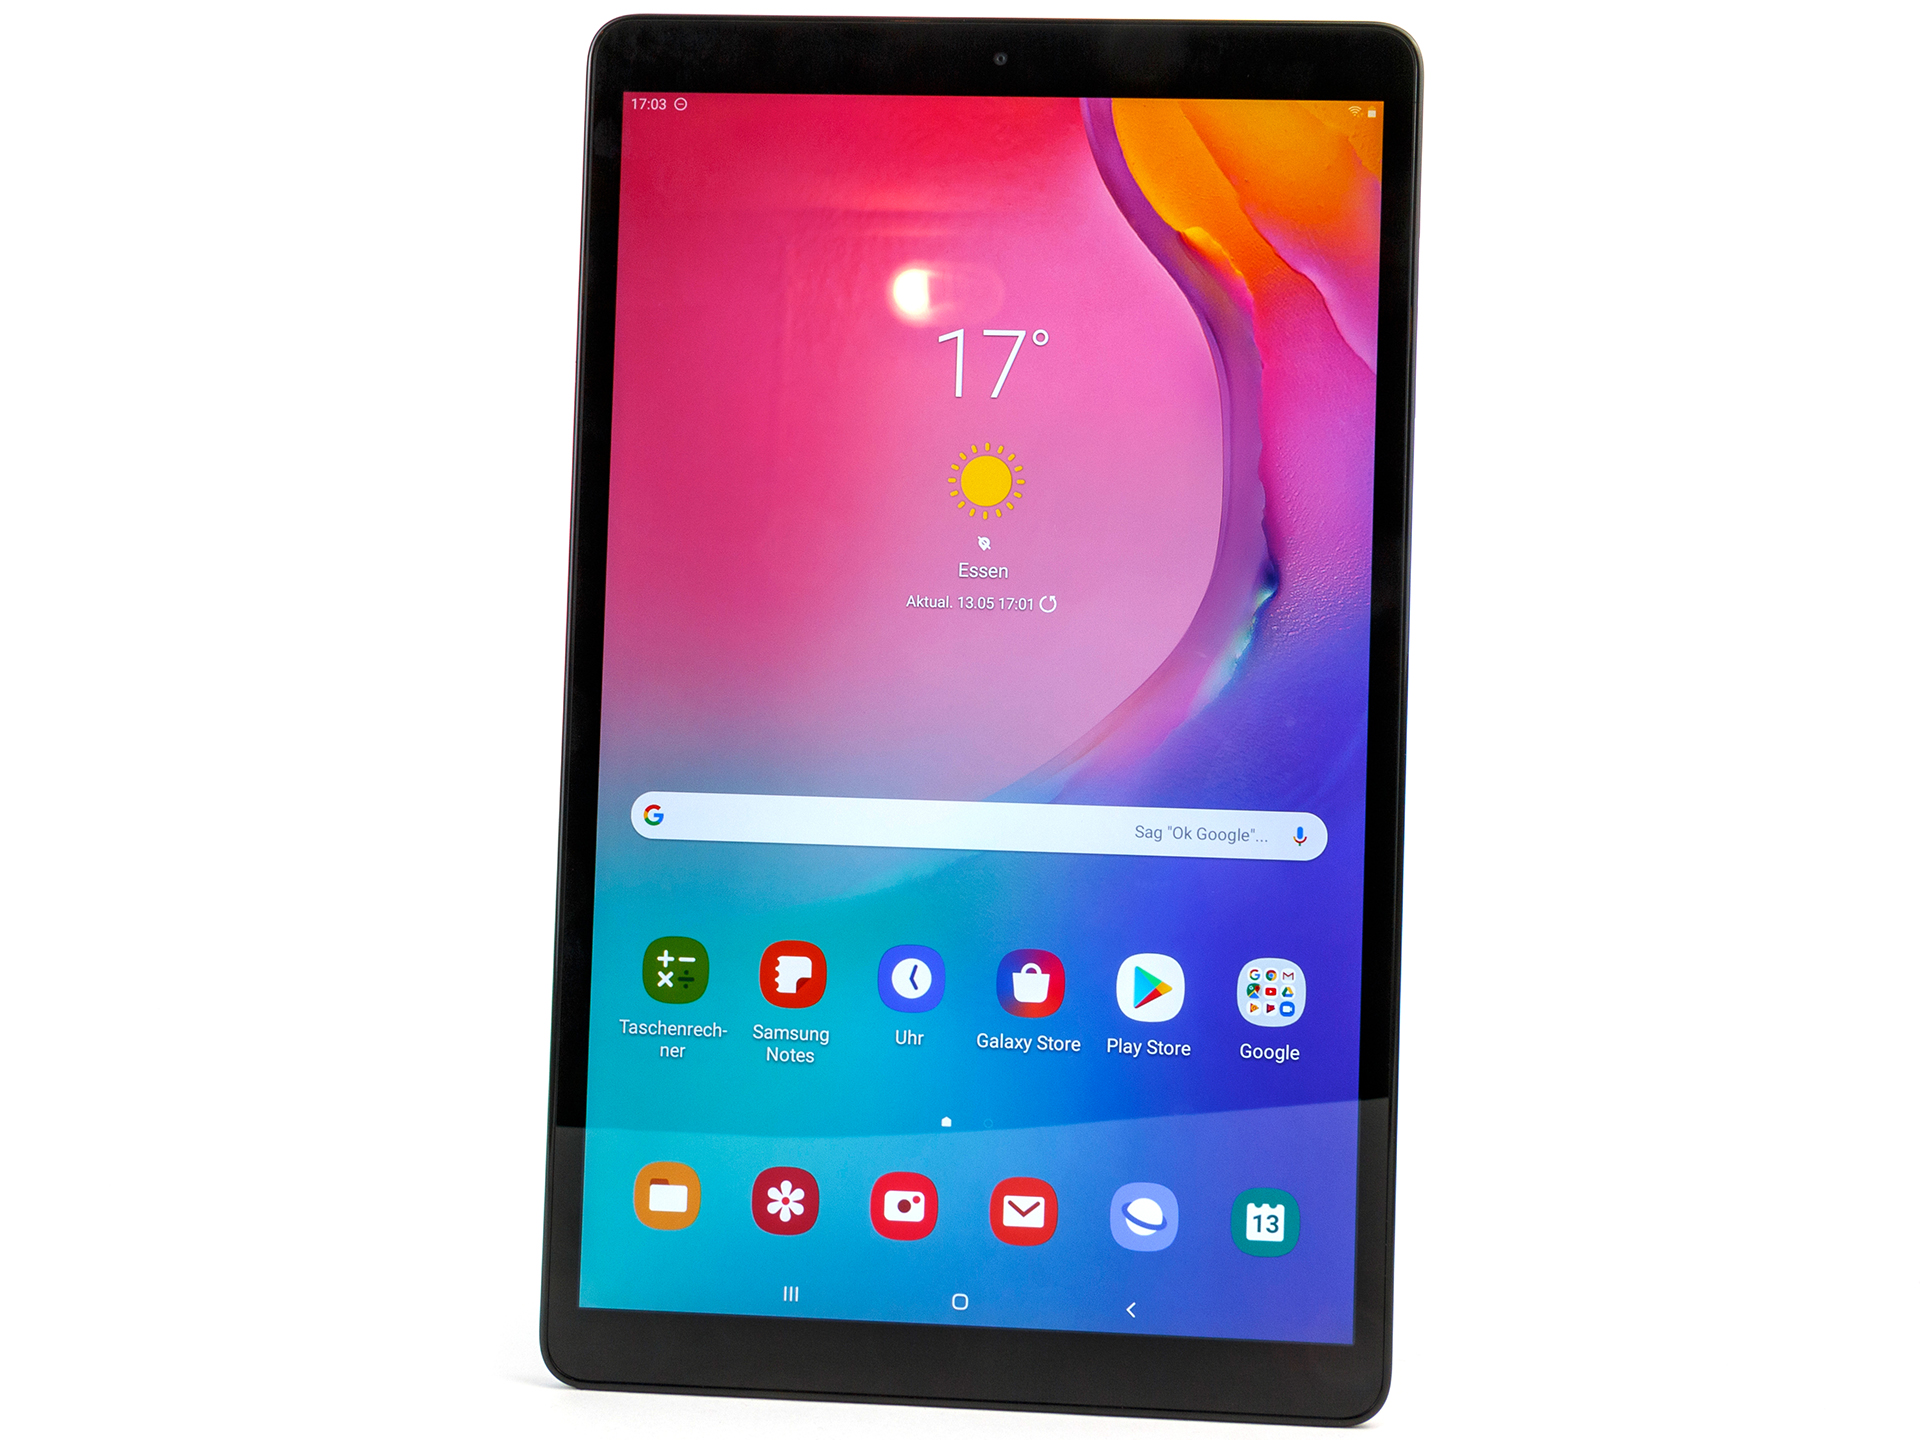 Stijg Ramkoers Onderbreking Samsung Galaxy Tab A 10.1 (2019) Tablet Review - NotebookCheck.net Reviews